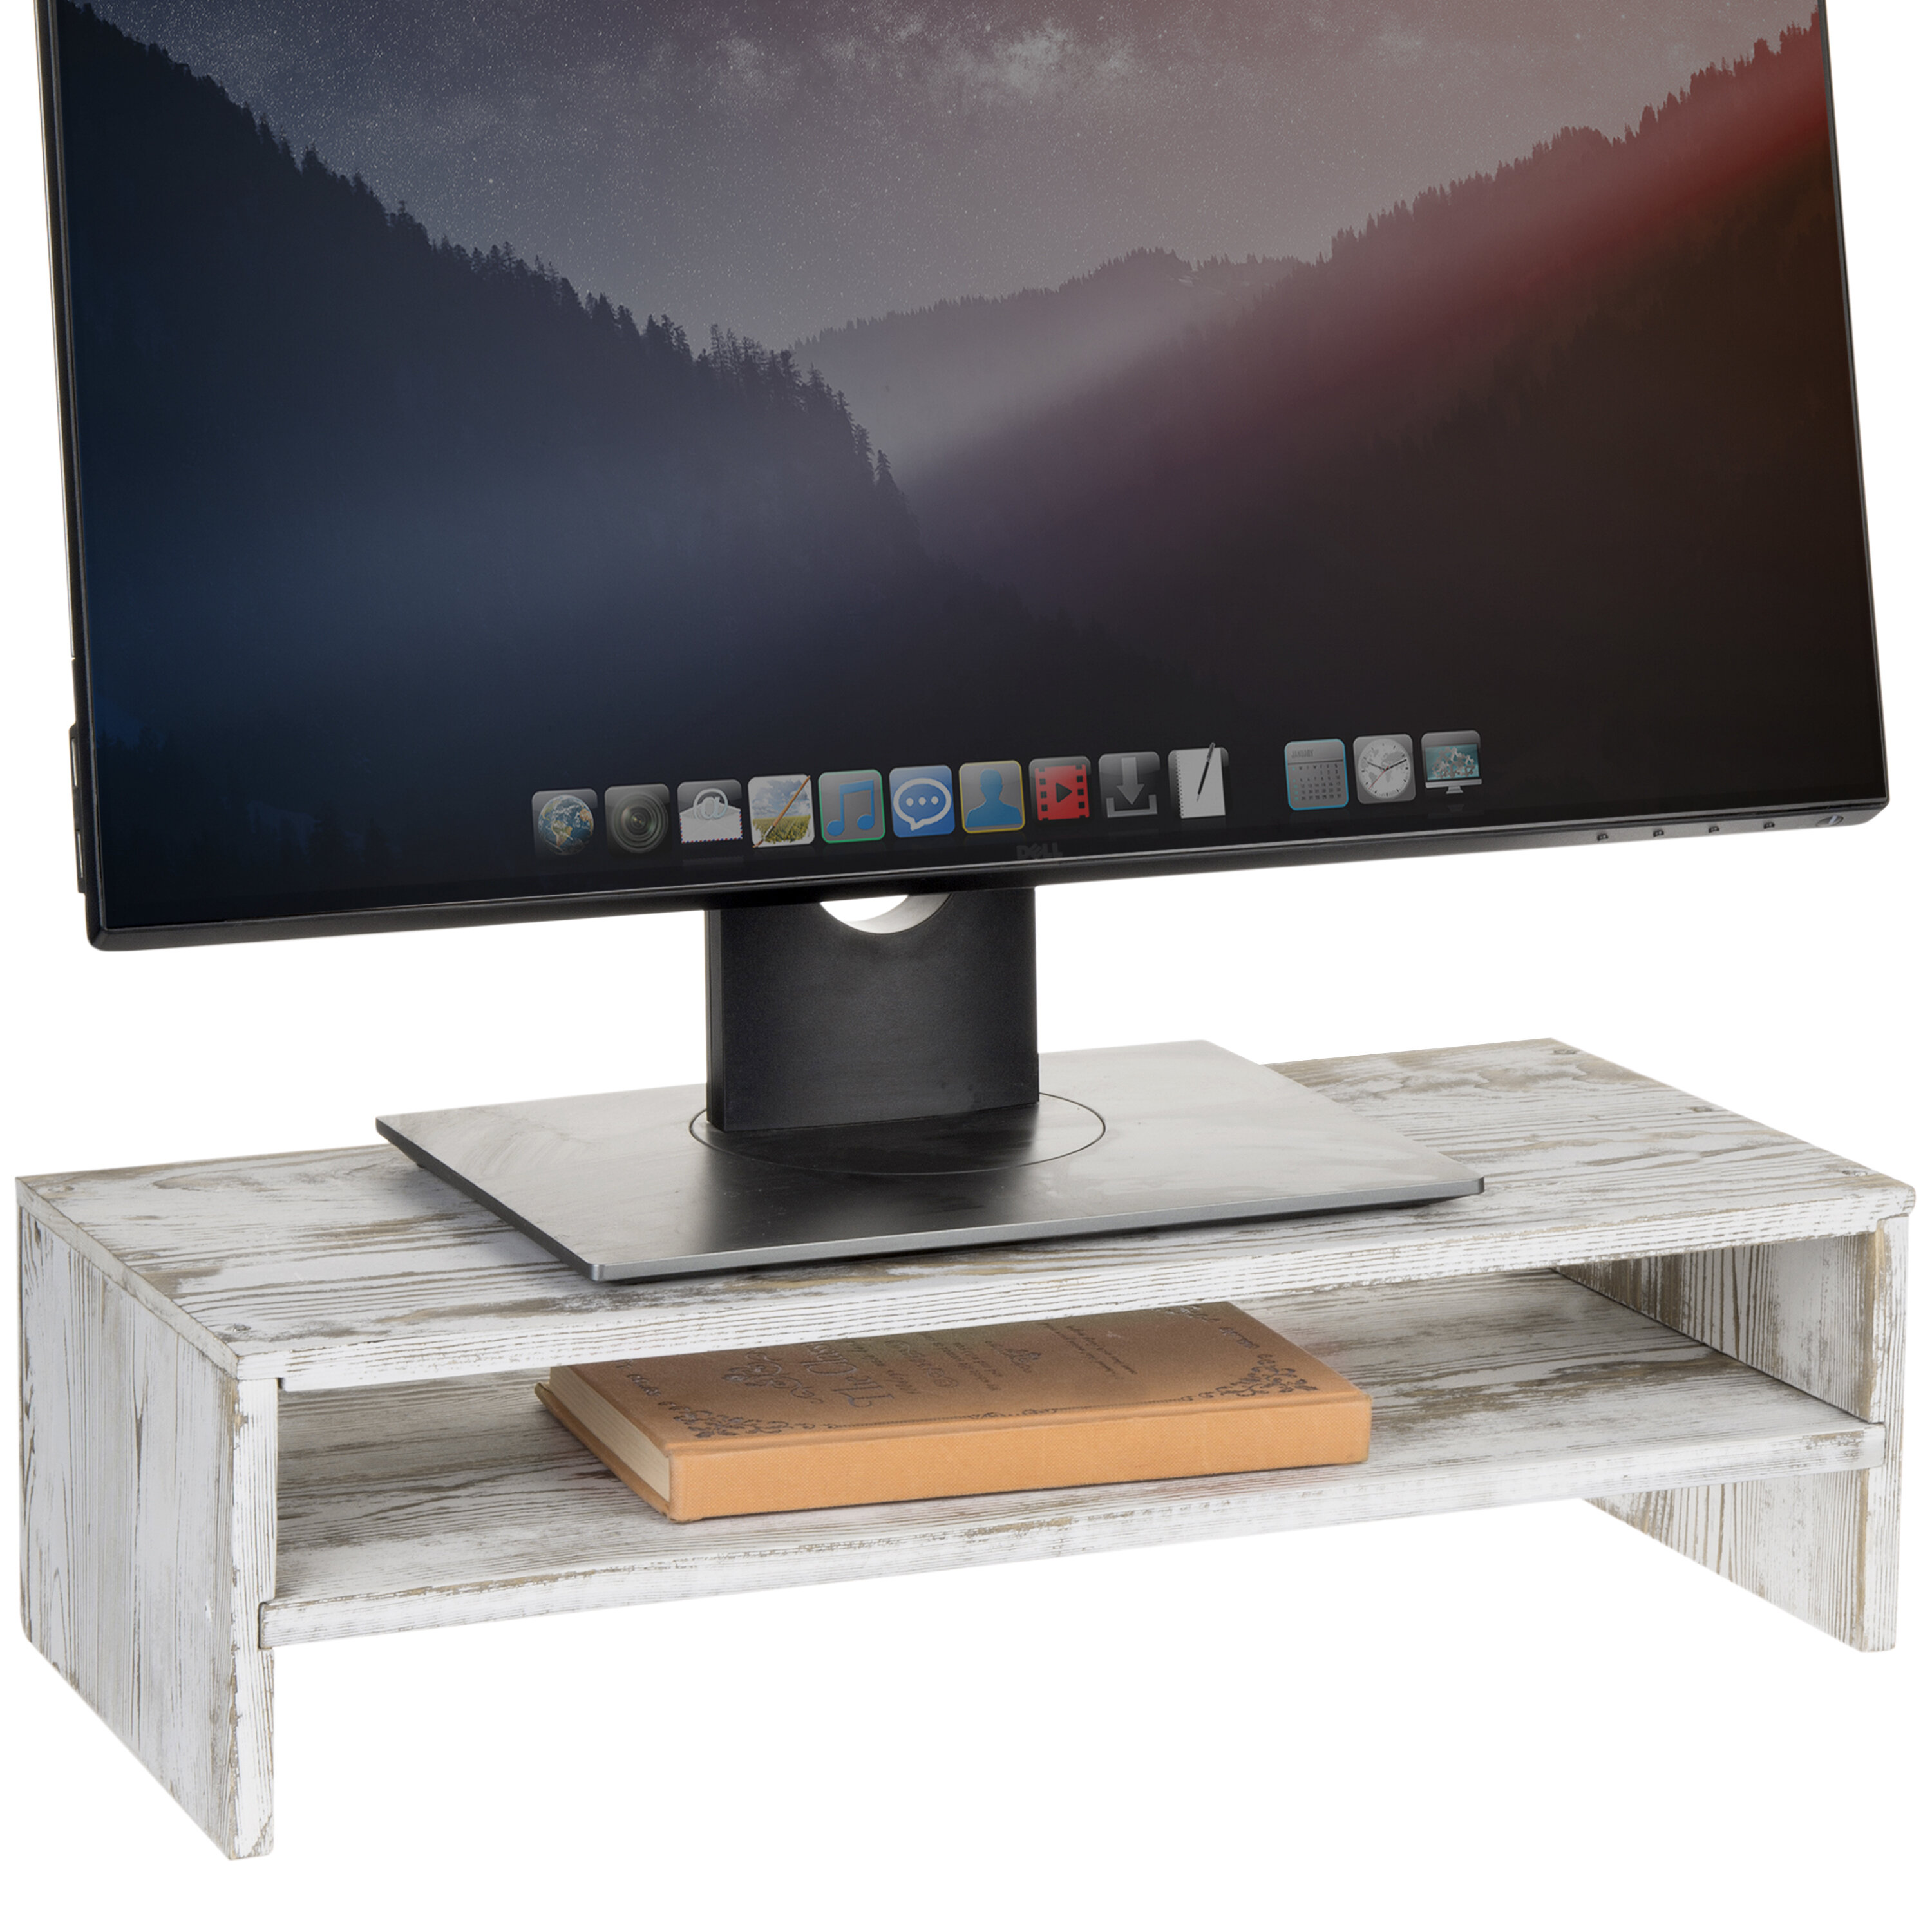 Acacia Wood Computer Monitor Desk Stand, 2 Tier Desktop Storage